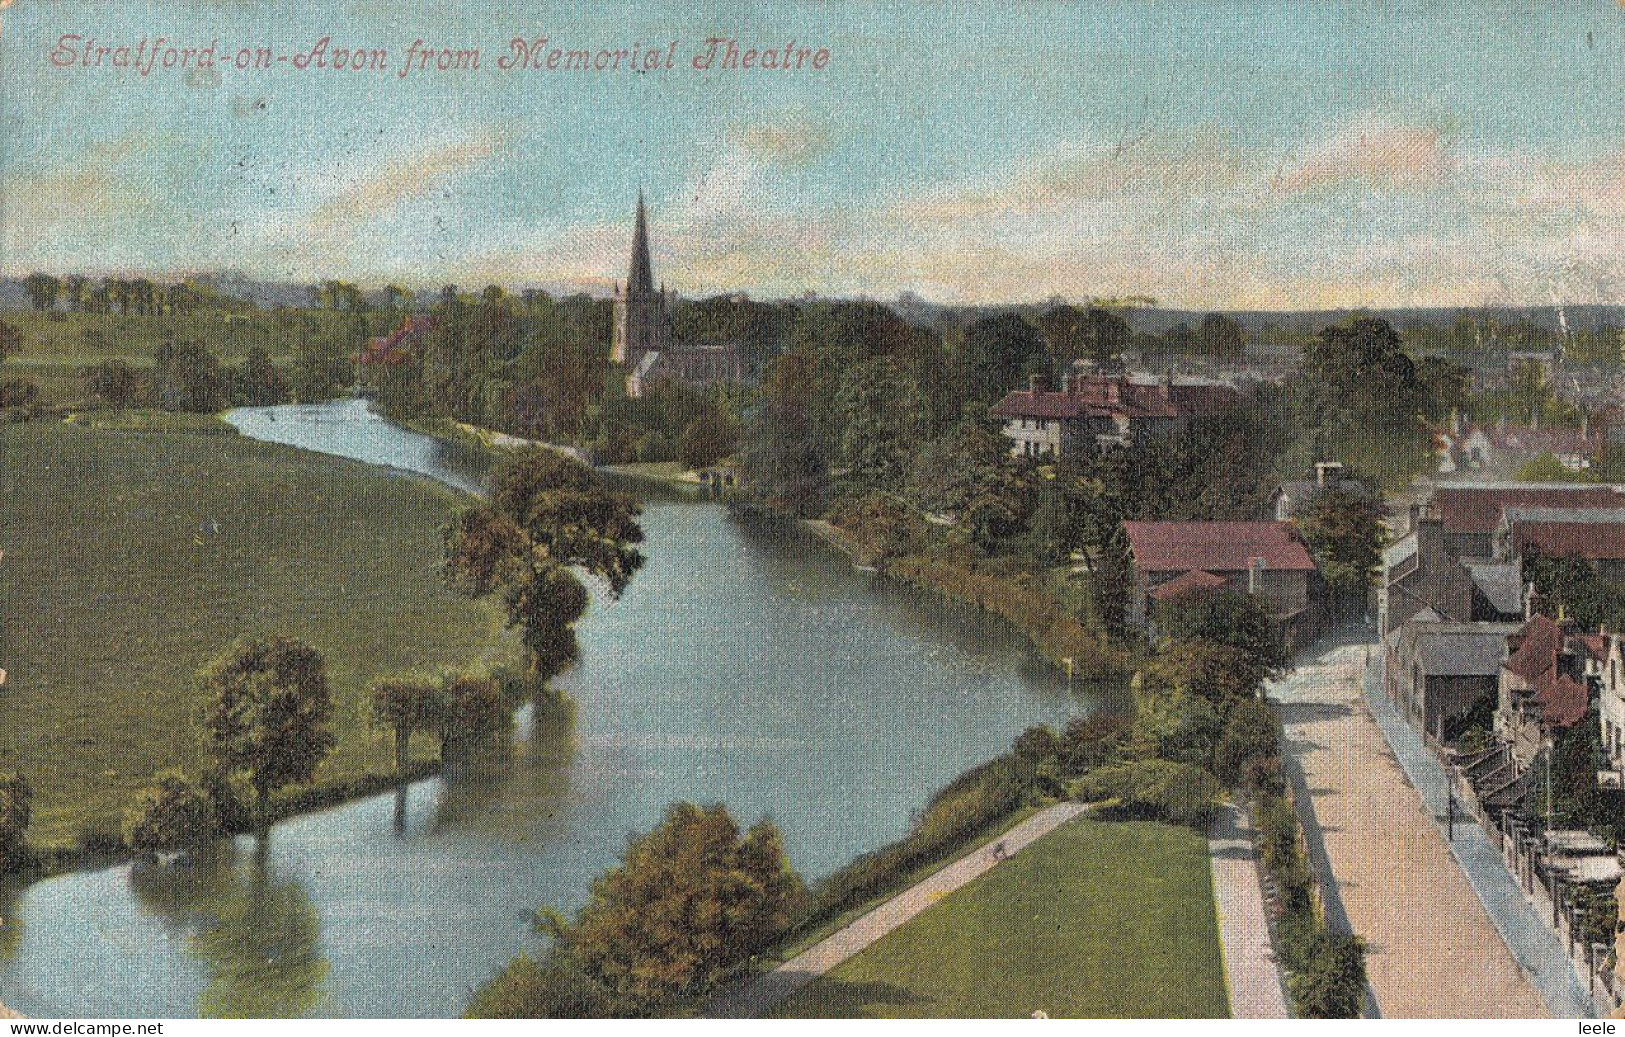 BJ30. Vintage Postcard. Stratford On Avon From Memorial Theatre. - Stratford Upon Avon